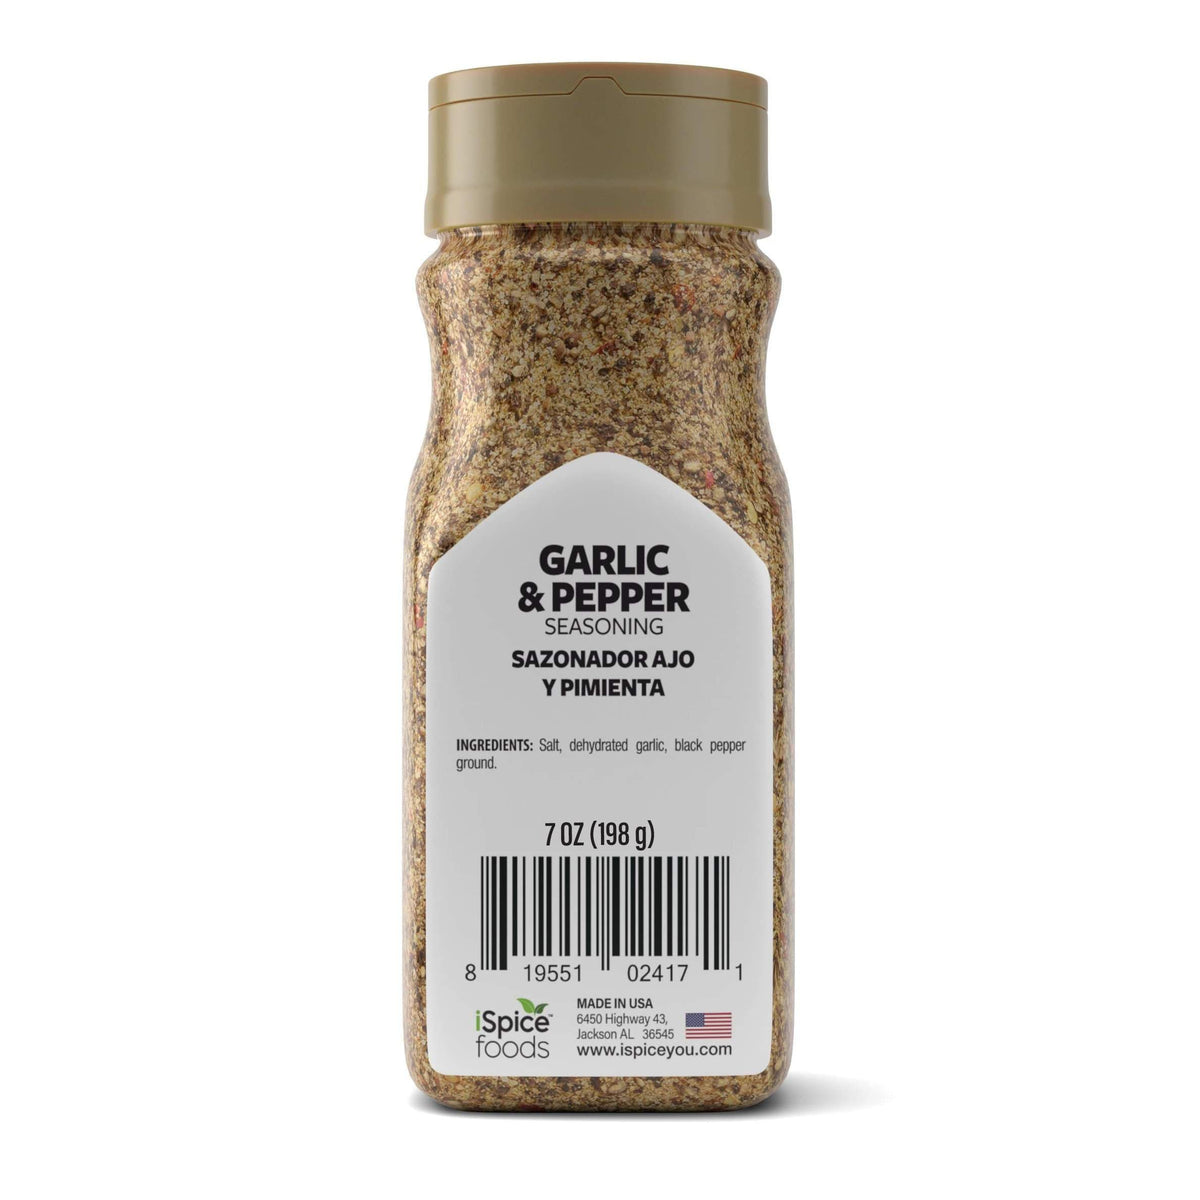 Garlic Pepper Seasoning.Garlic Pepper Seasoning - Simple Yet Tasty Combination